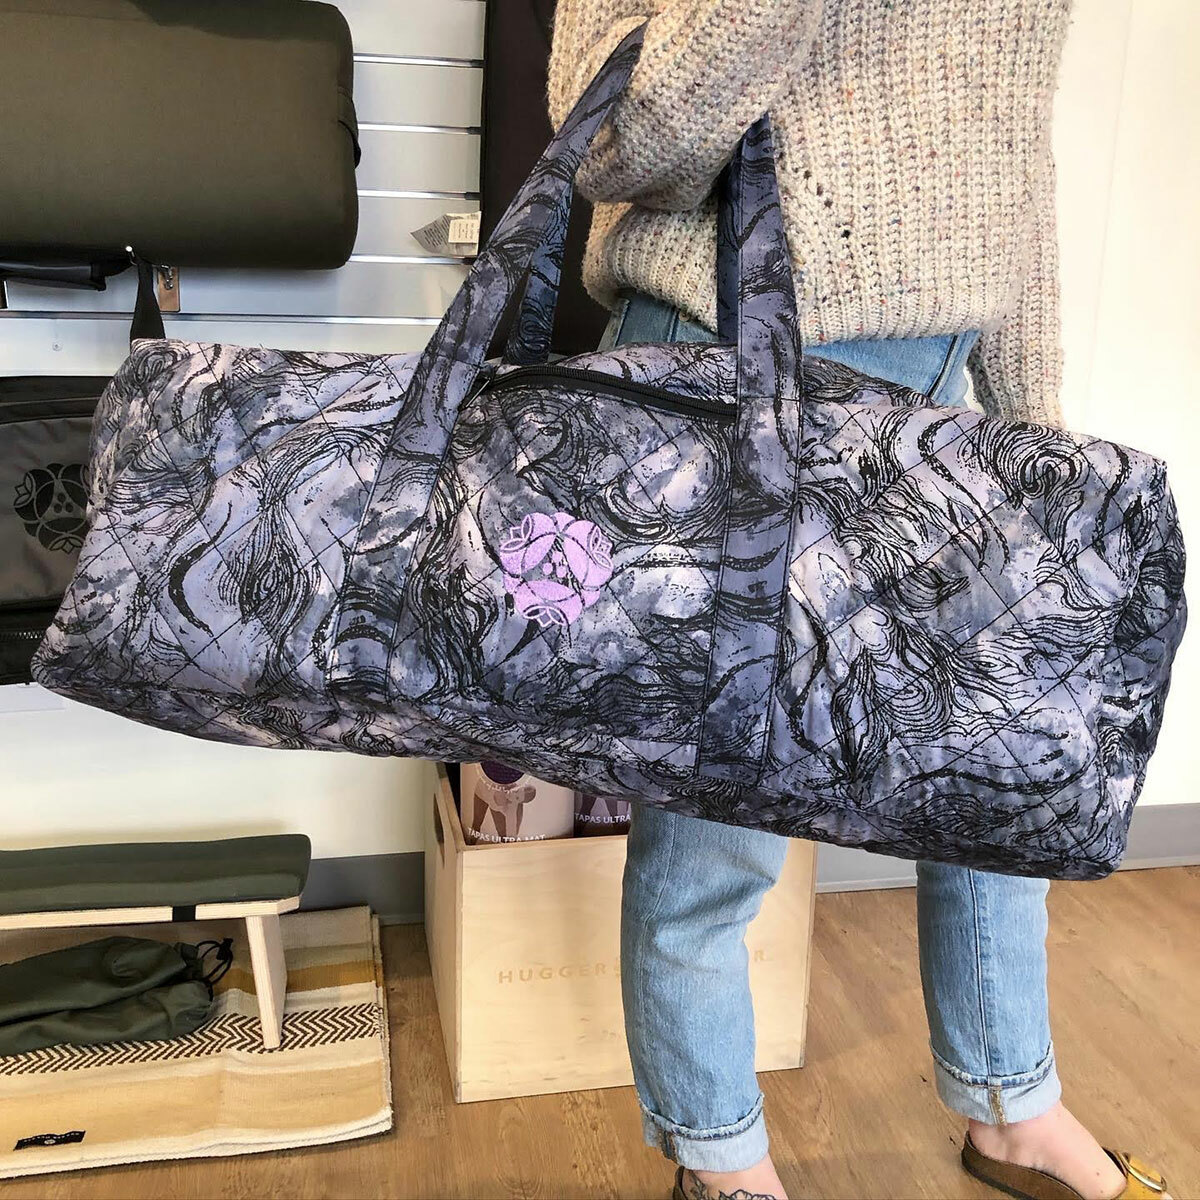 Quilted Yoga Mat Bag - Hugger Mugger